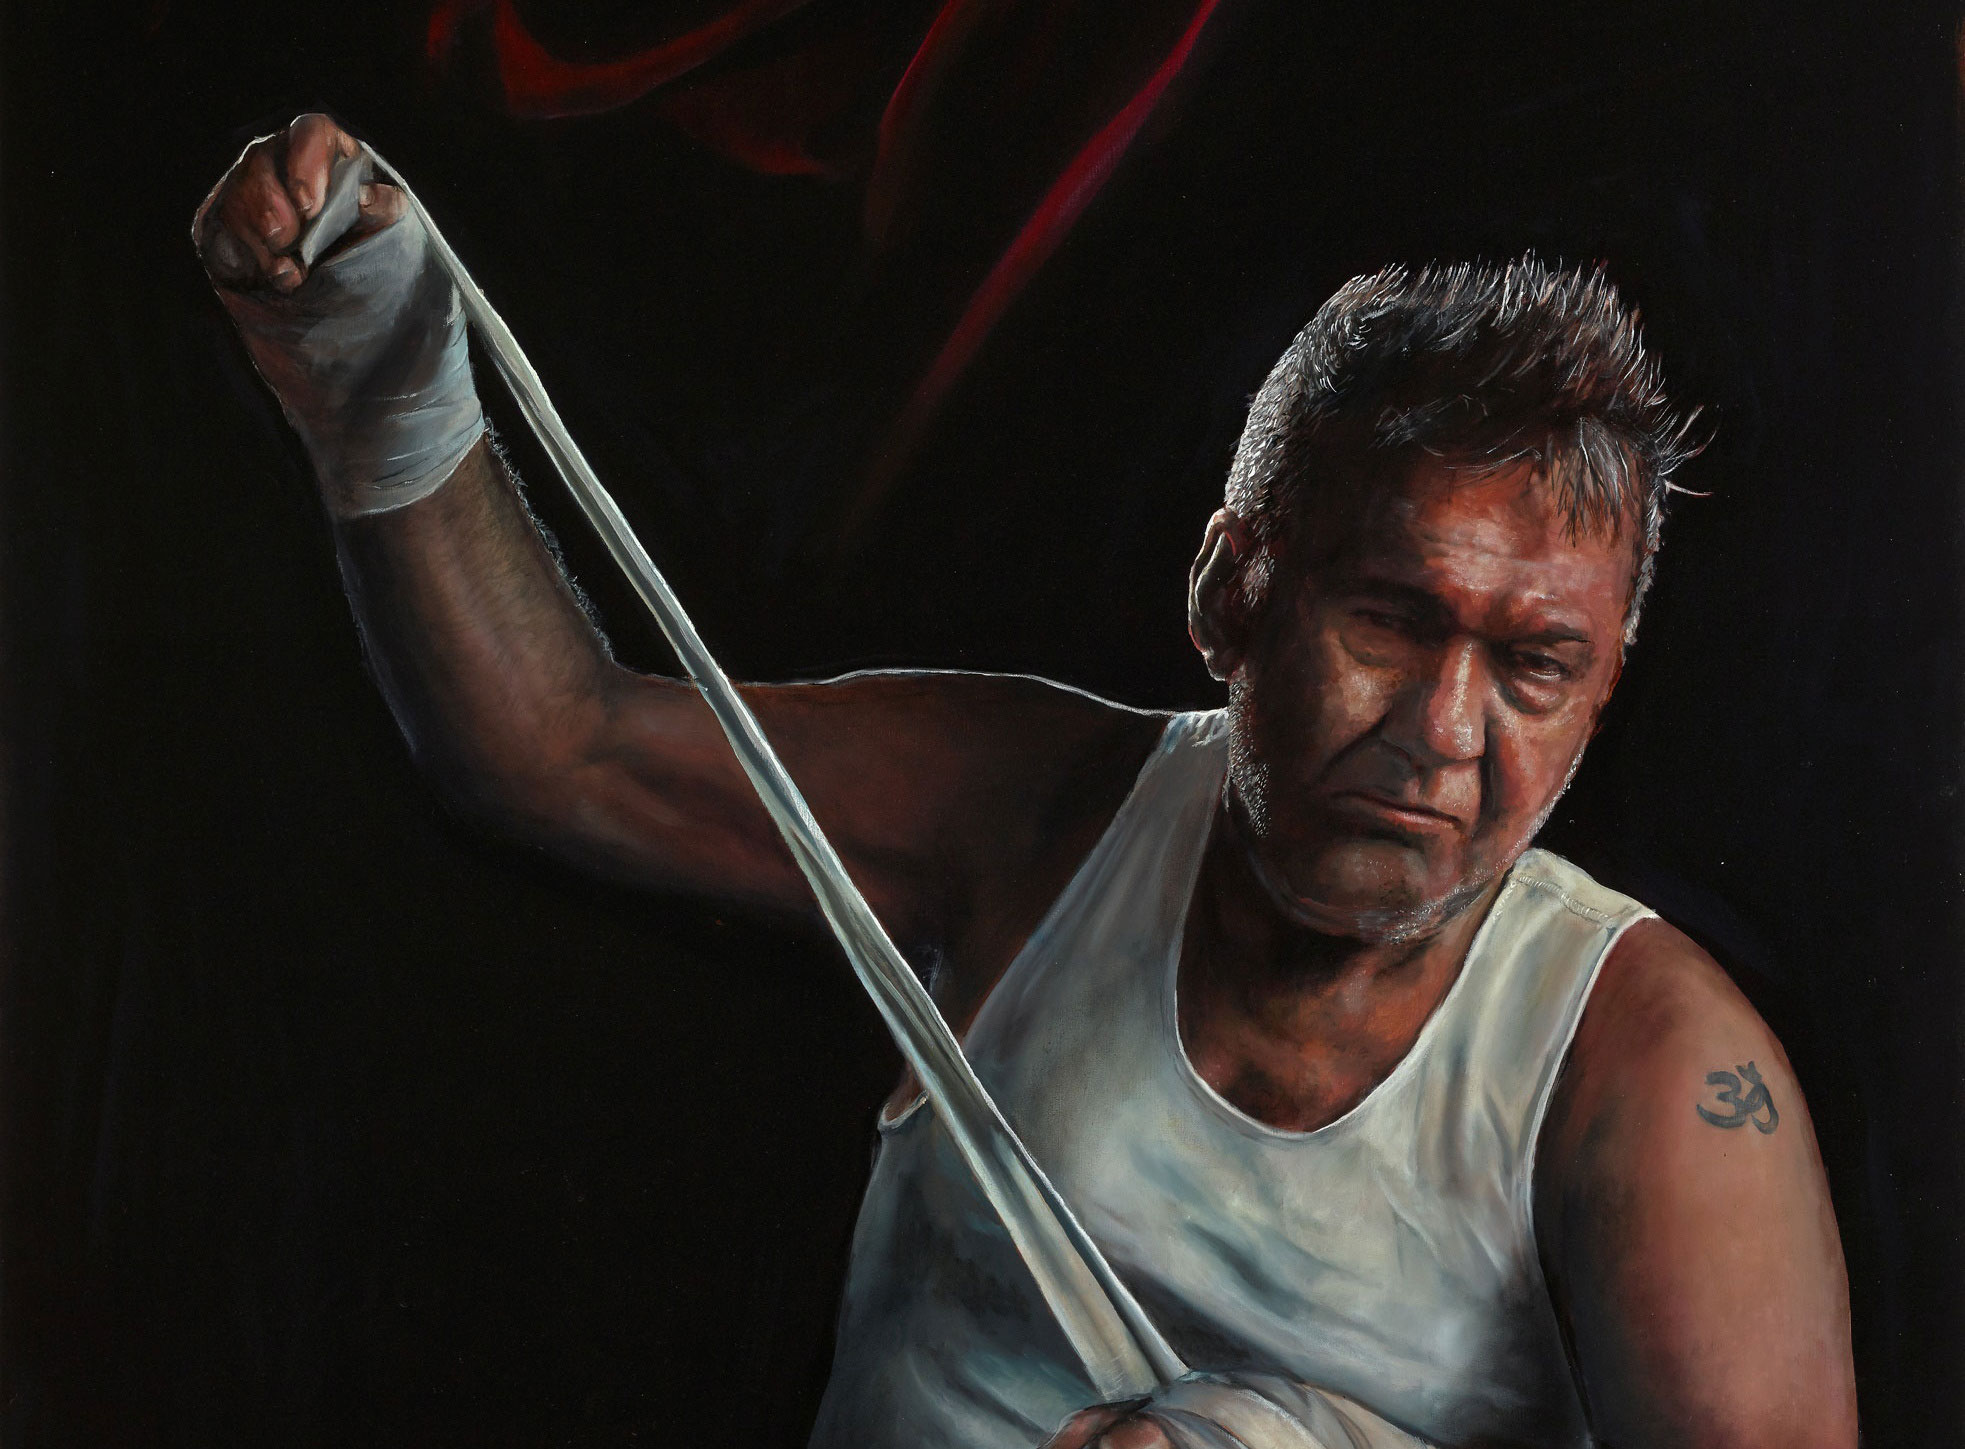 Jamie Preisz, 2018, Jimmy (title fight), oil on canvas.